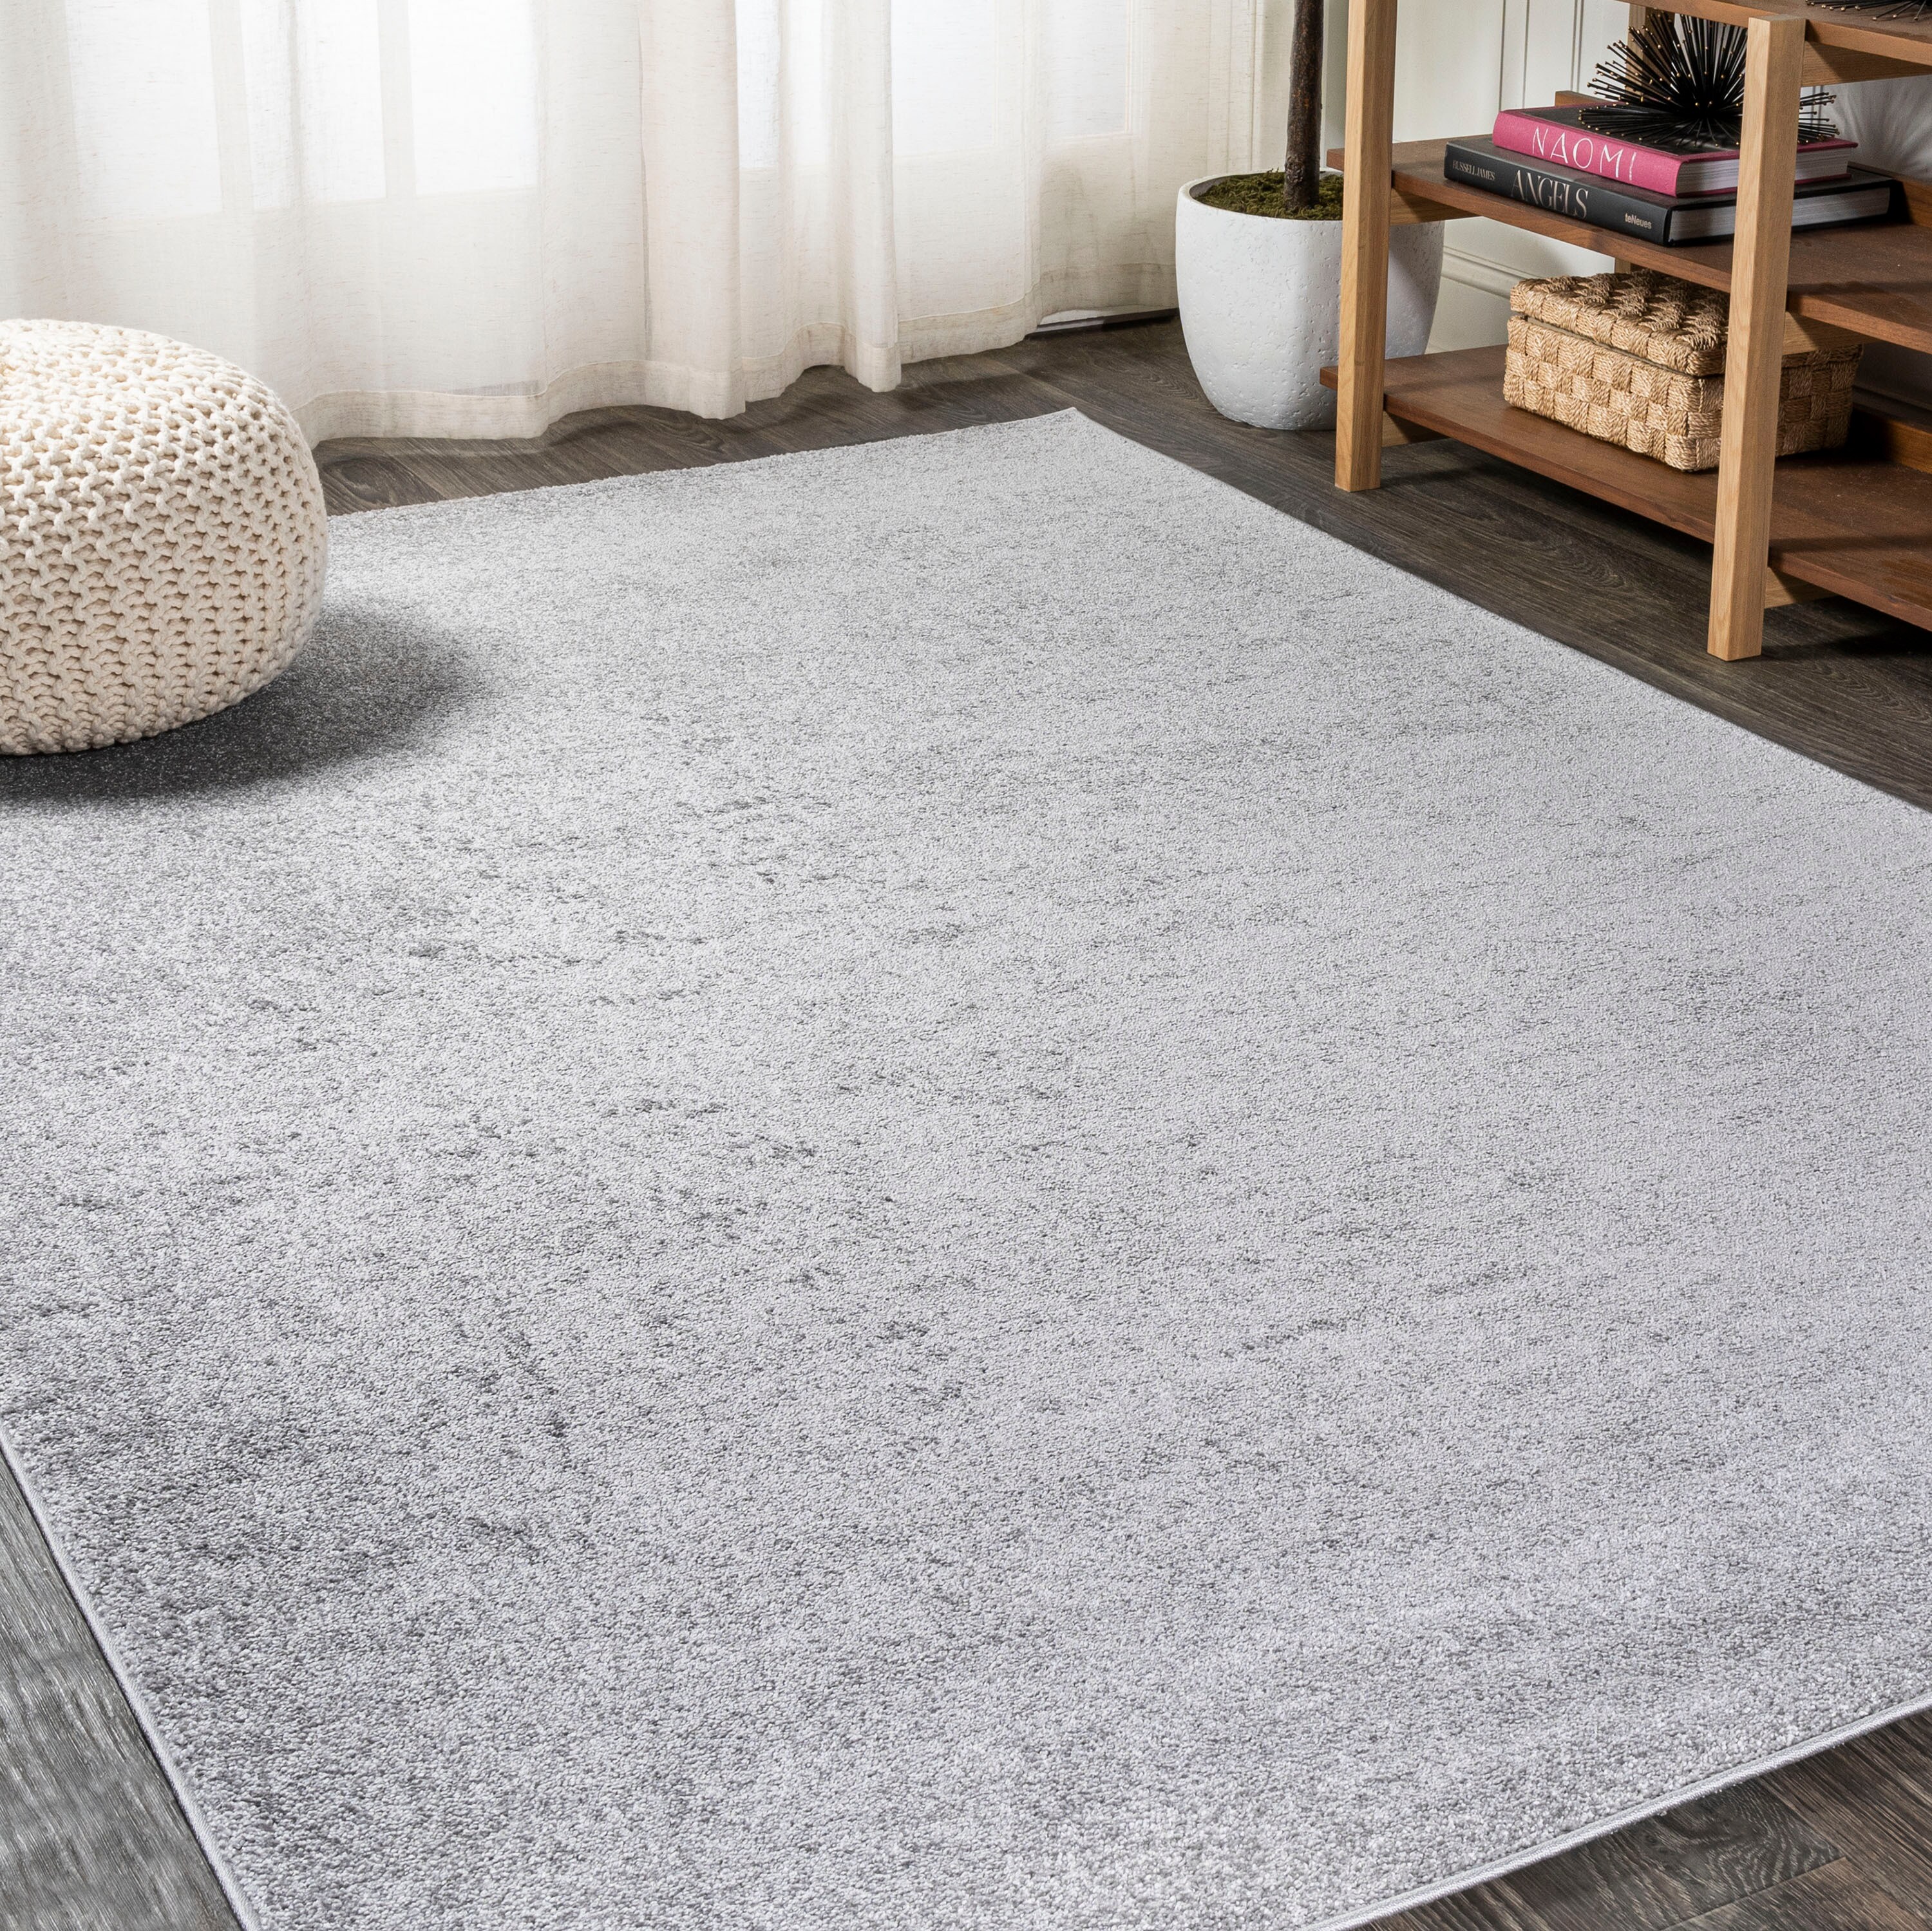 Plain Grey Rug Pale Light Grey Carpet Living Room Small Extra Large Luxury New 